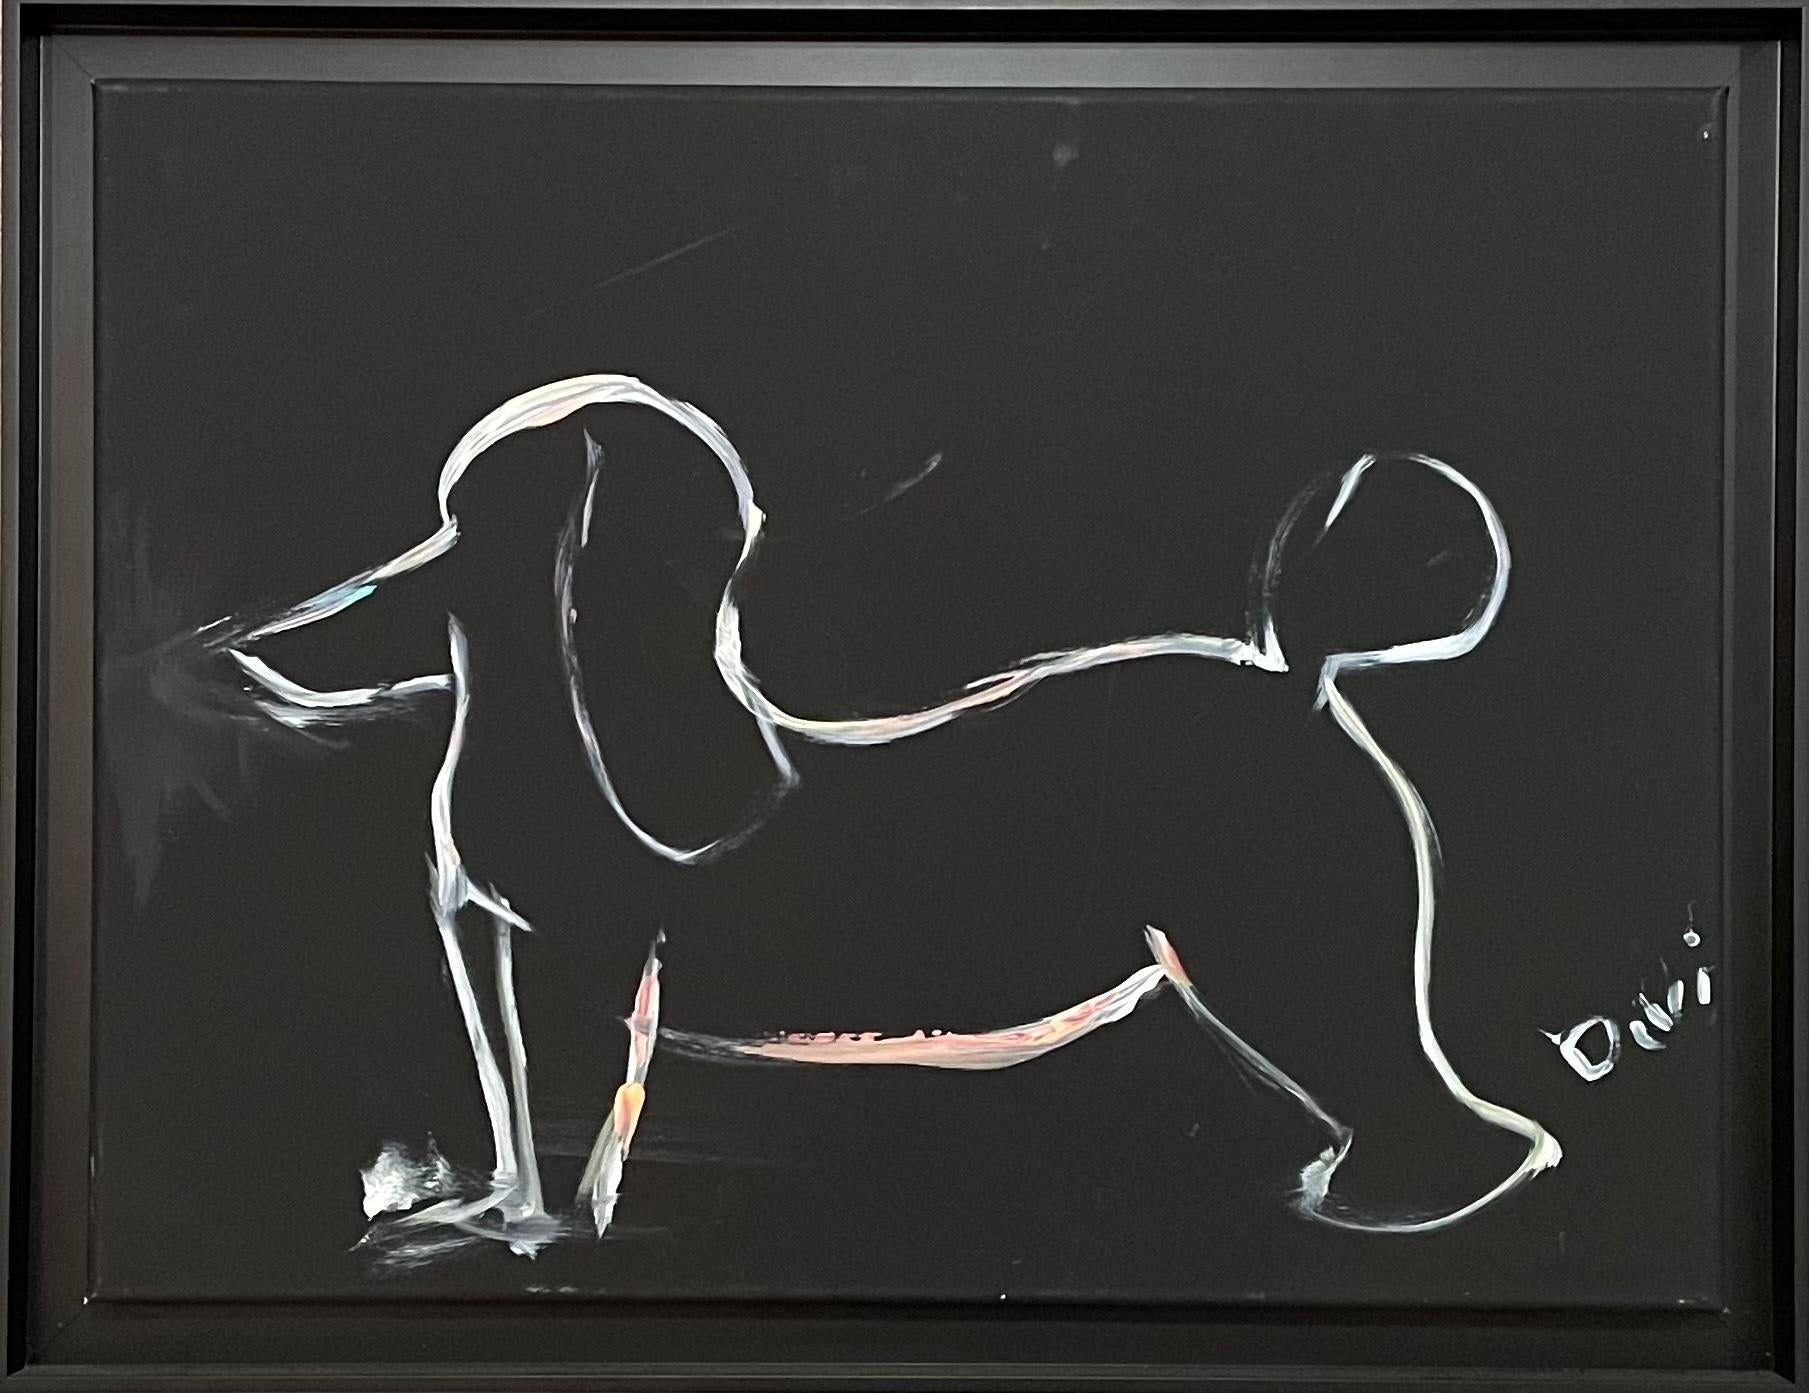 'Dog’ Minimalist Acrylic On Canvas Contemporary Original Painting by Devie - Black Animal Painting by Devie Elzafon